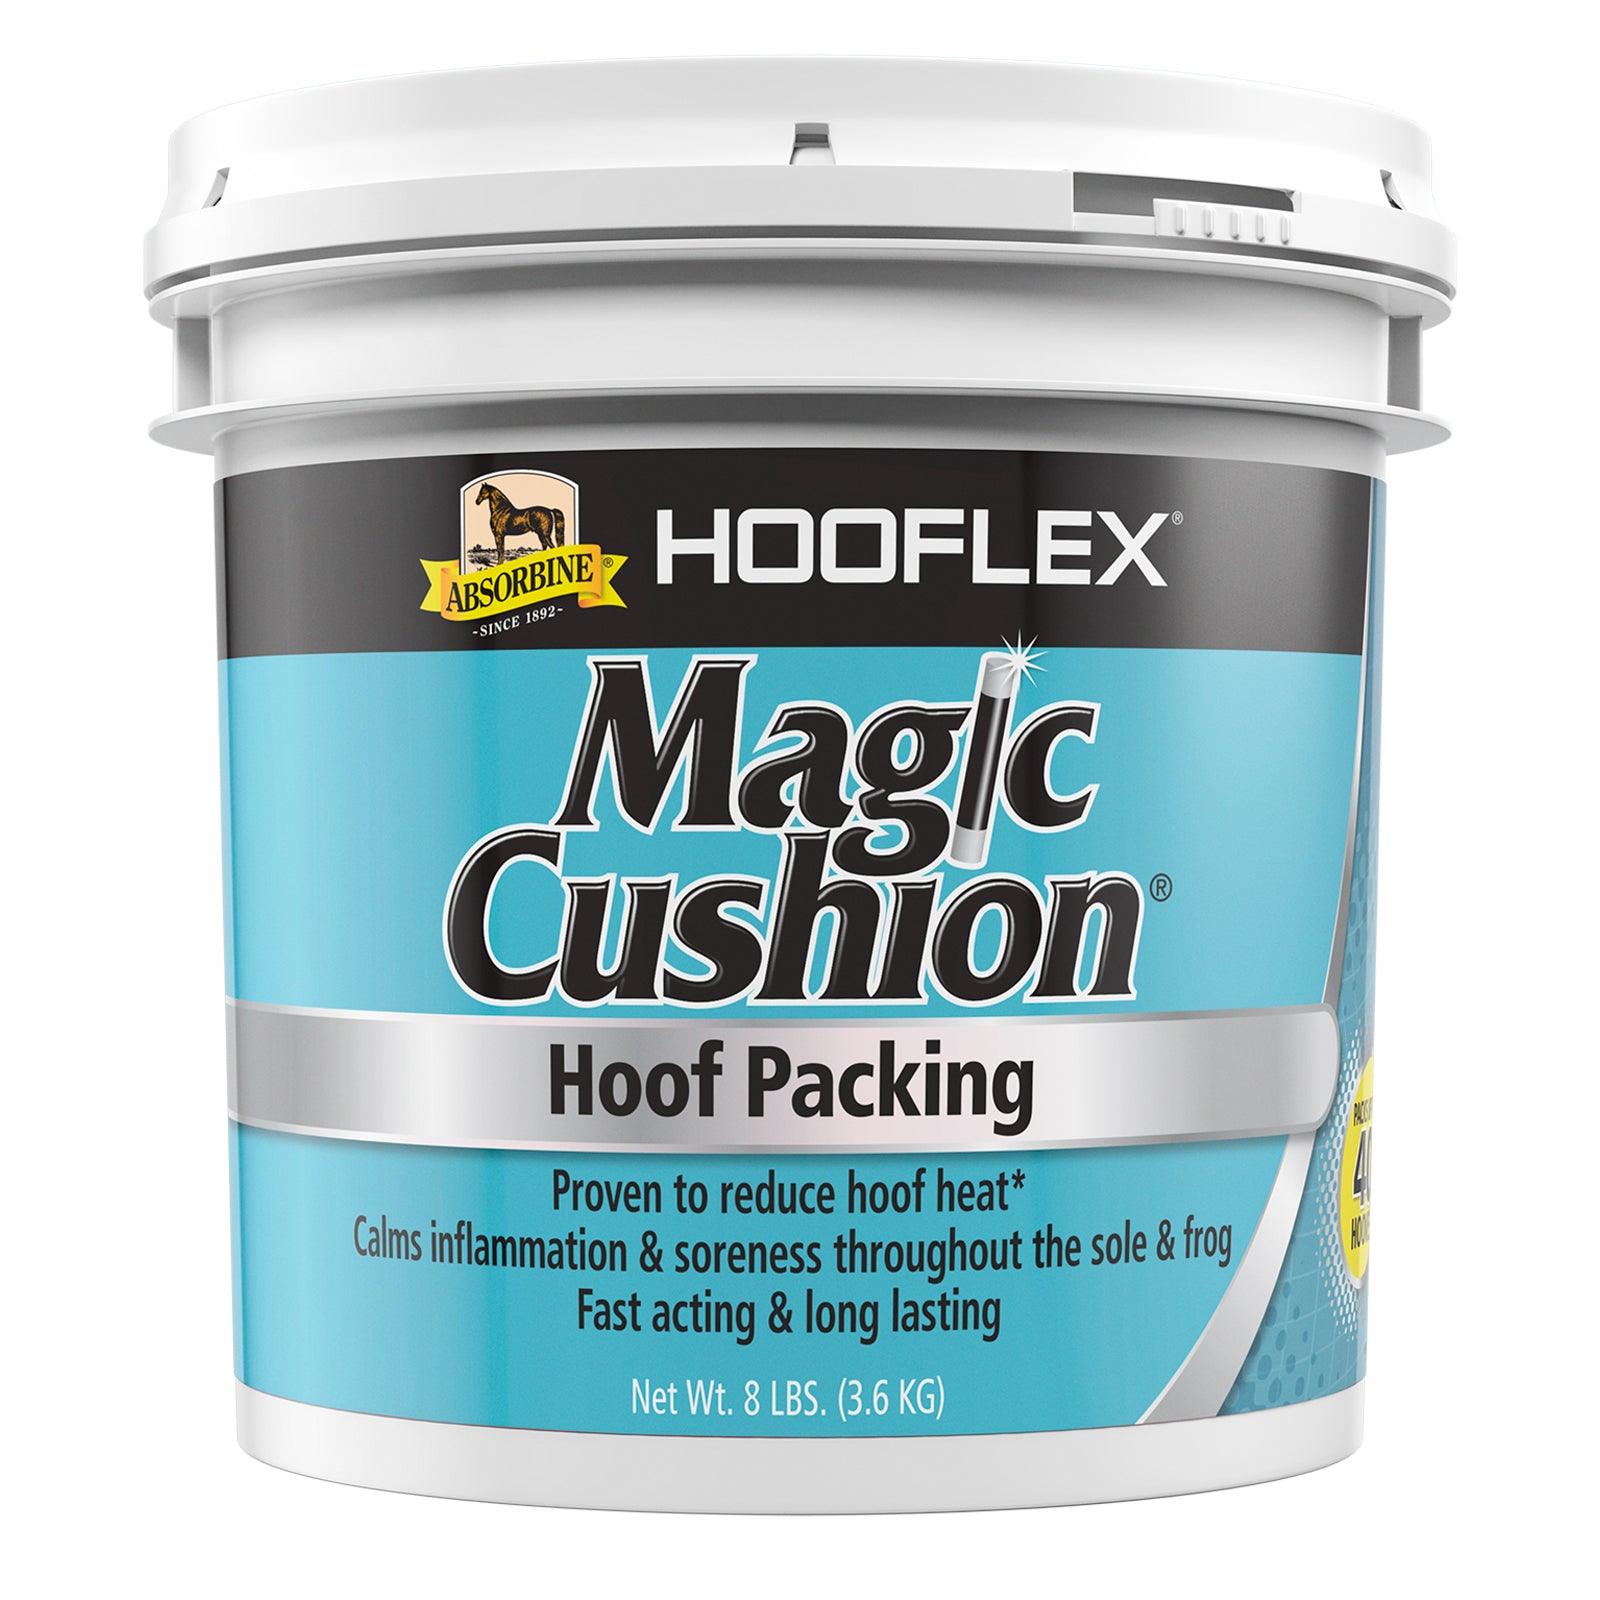 Magic Cushion® Hoof Packing Hoof Care absorbine 8 lb.  